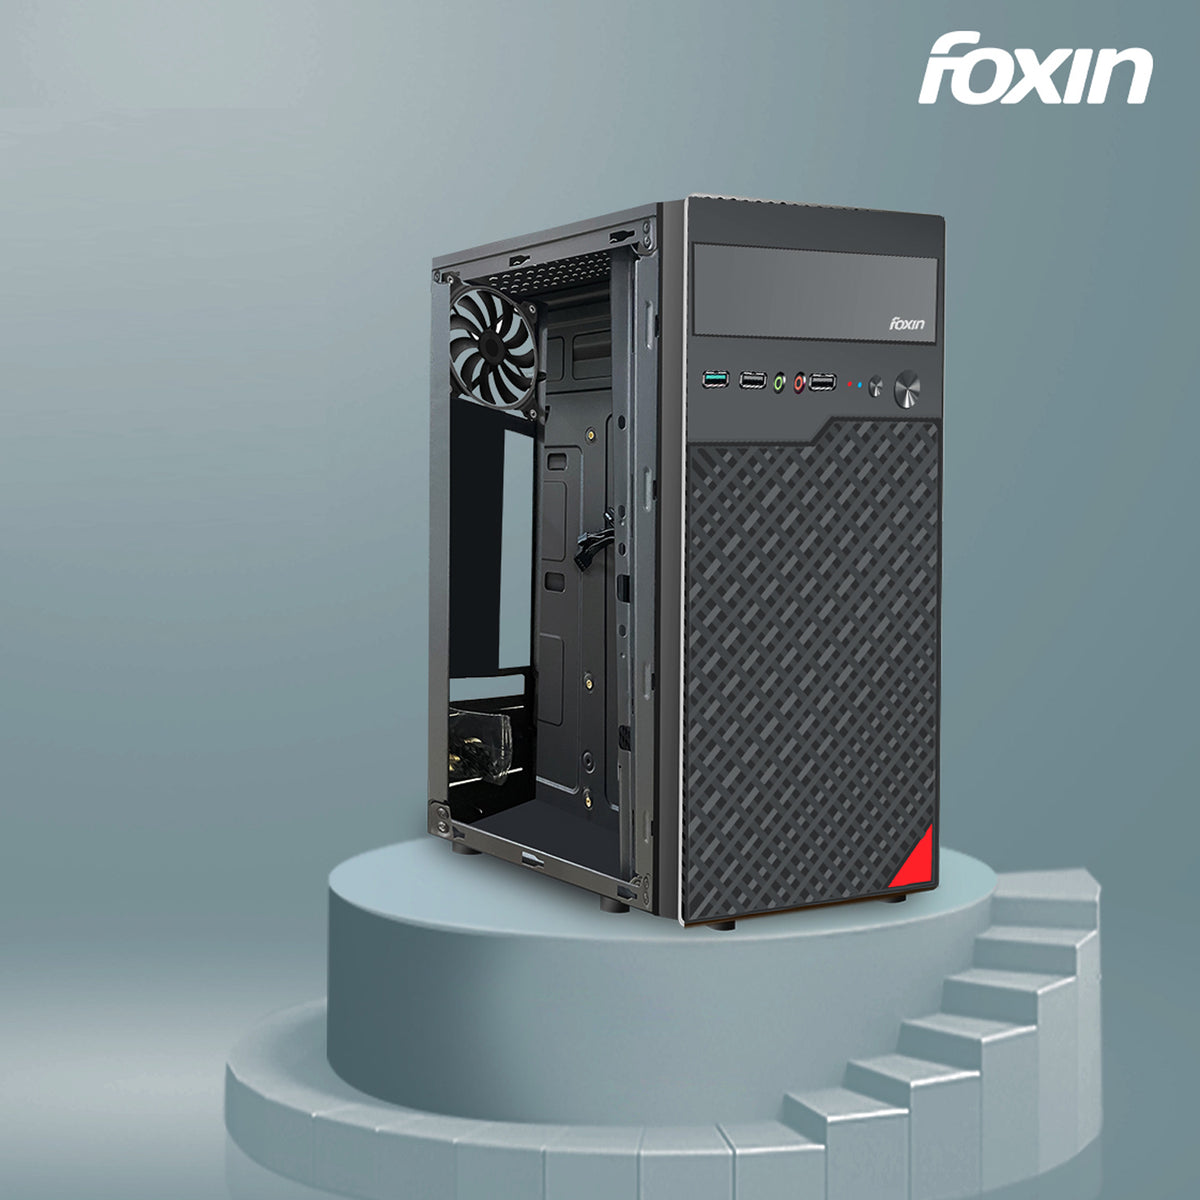 Foxin RACE Desktop Computer Case / PC Cabinet - with Steel Metal Body | Front Panel 2 x USB 1.0 Port | HD Audio/ MIC Jack Port | 8 CM x 12 CM Fan Position | Color Metallic Black